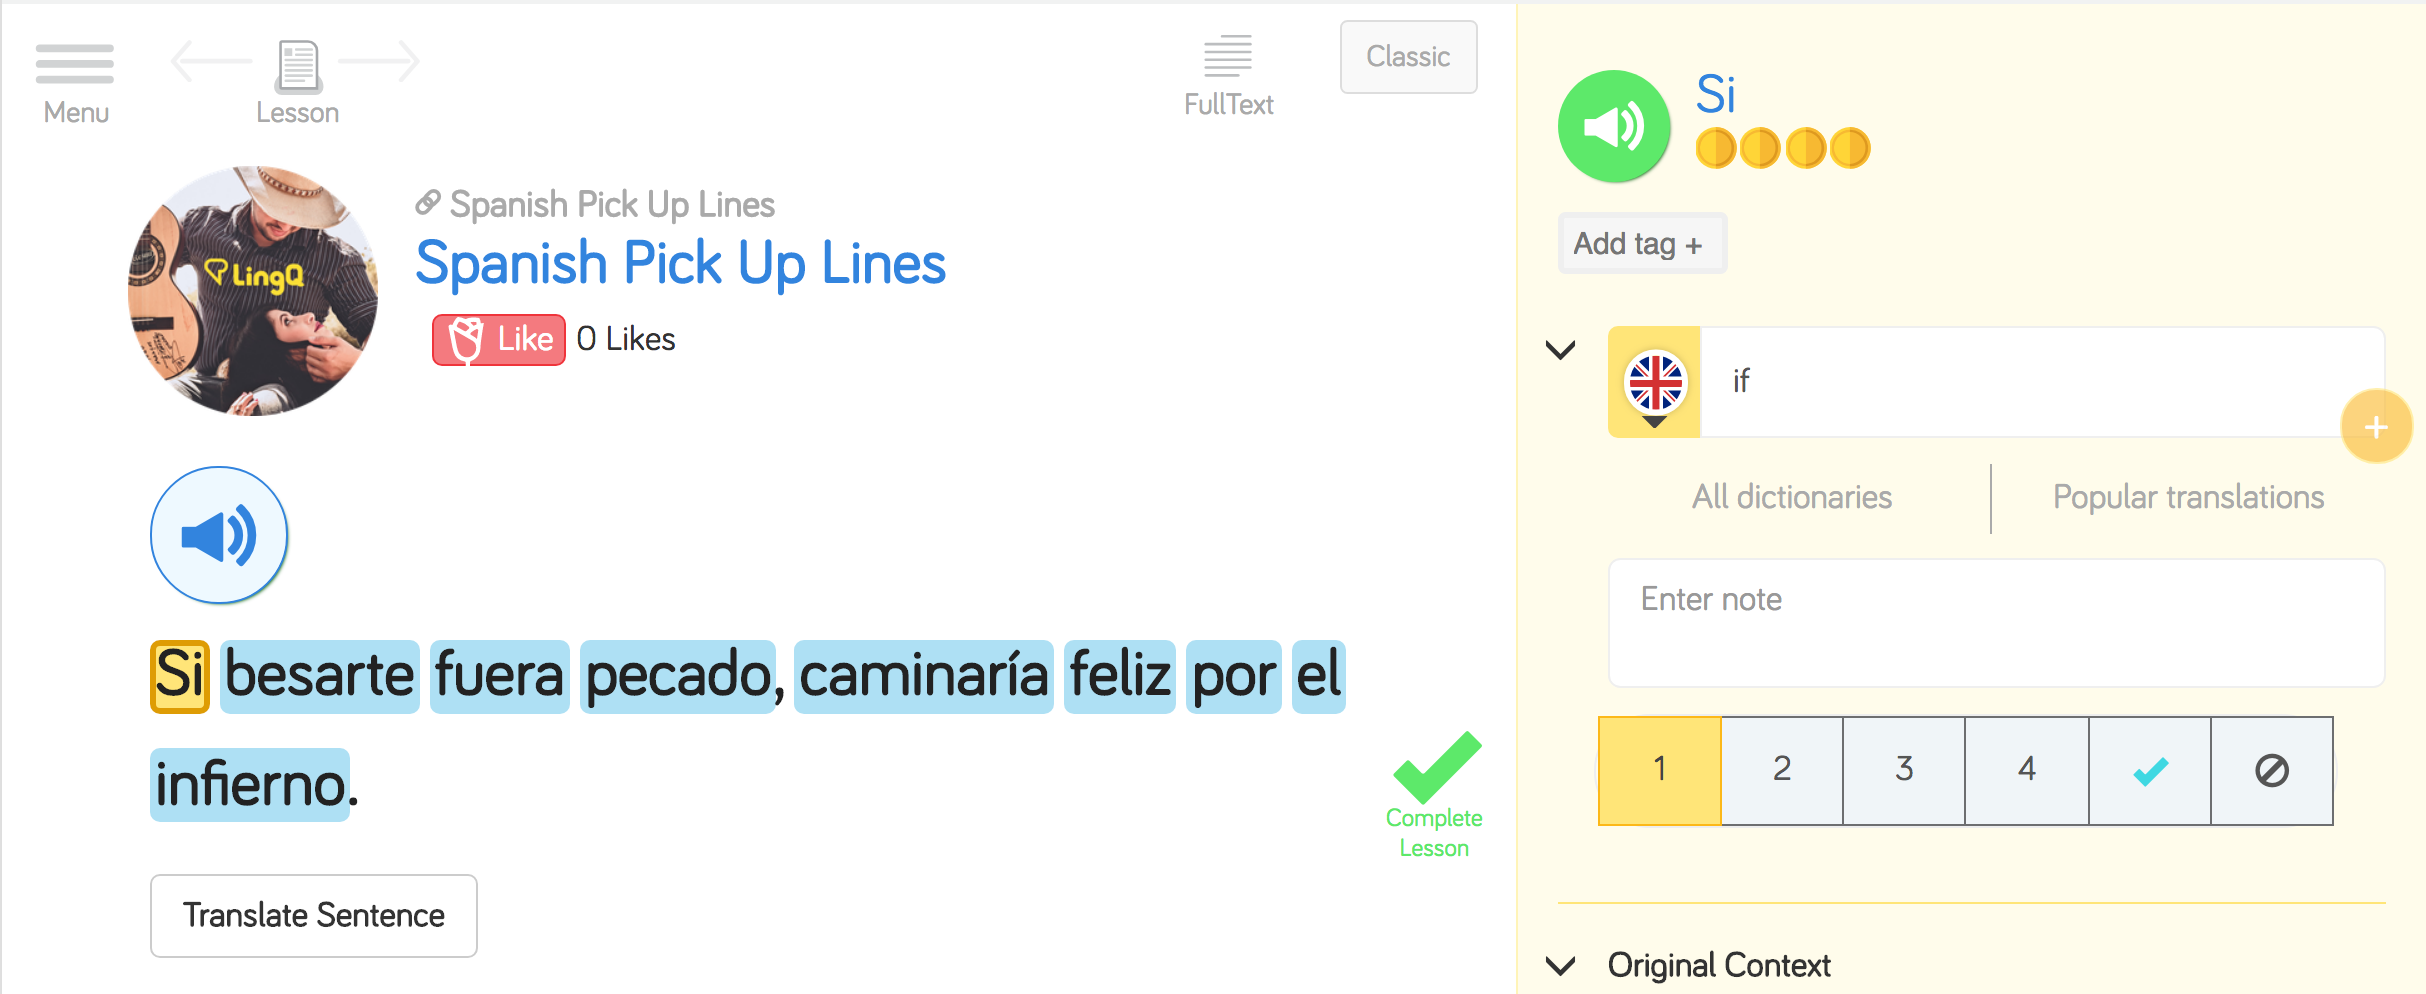 Flirting in Spanish: A beginner’s cheat sheet